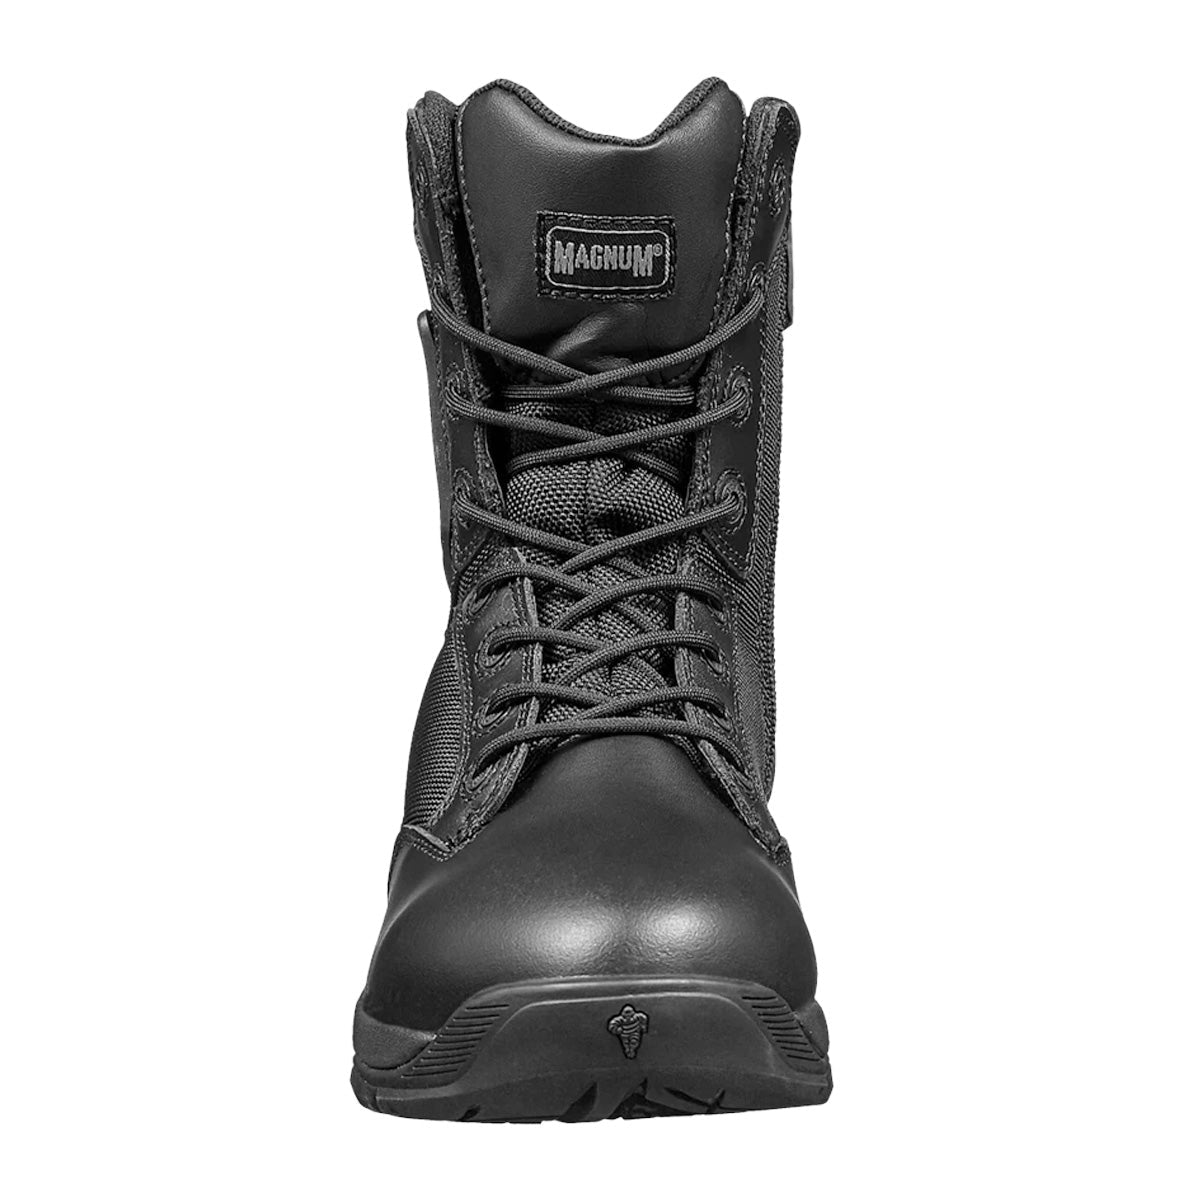 Magnum Strike Force 8.0 Side-Zip Composite Toe Women's Boots Black Footwear Magnum Footwear Tactical Gear Supplier Tactical Distributors Australia